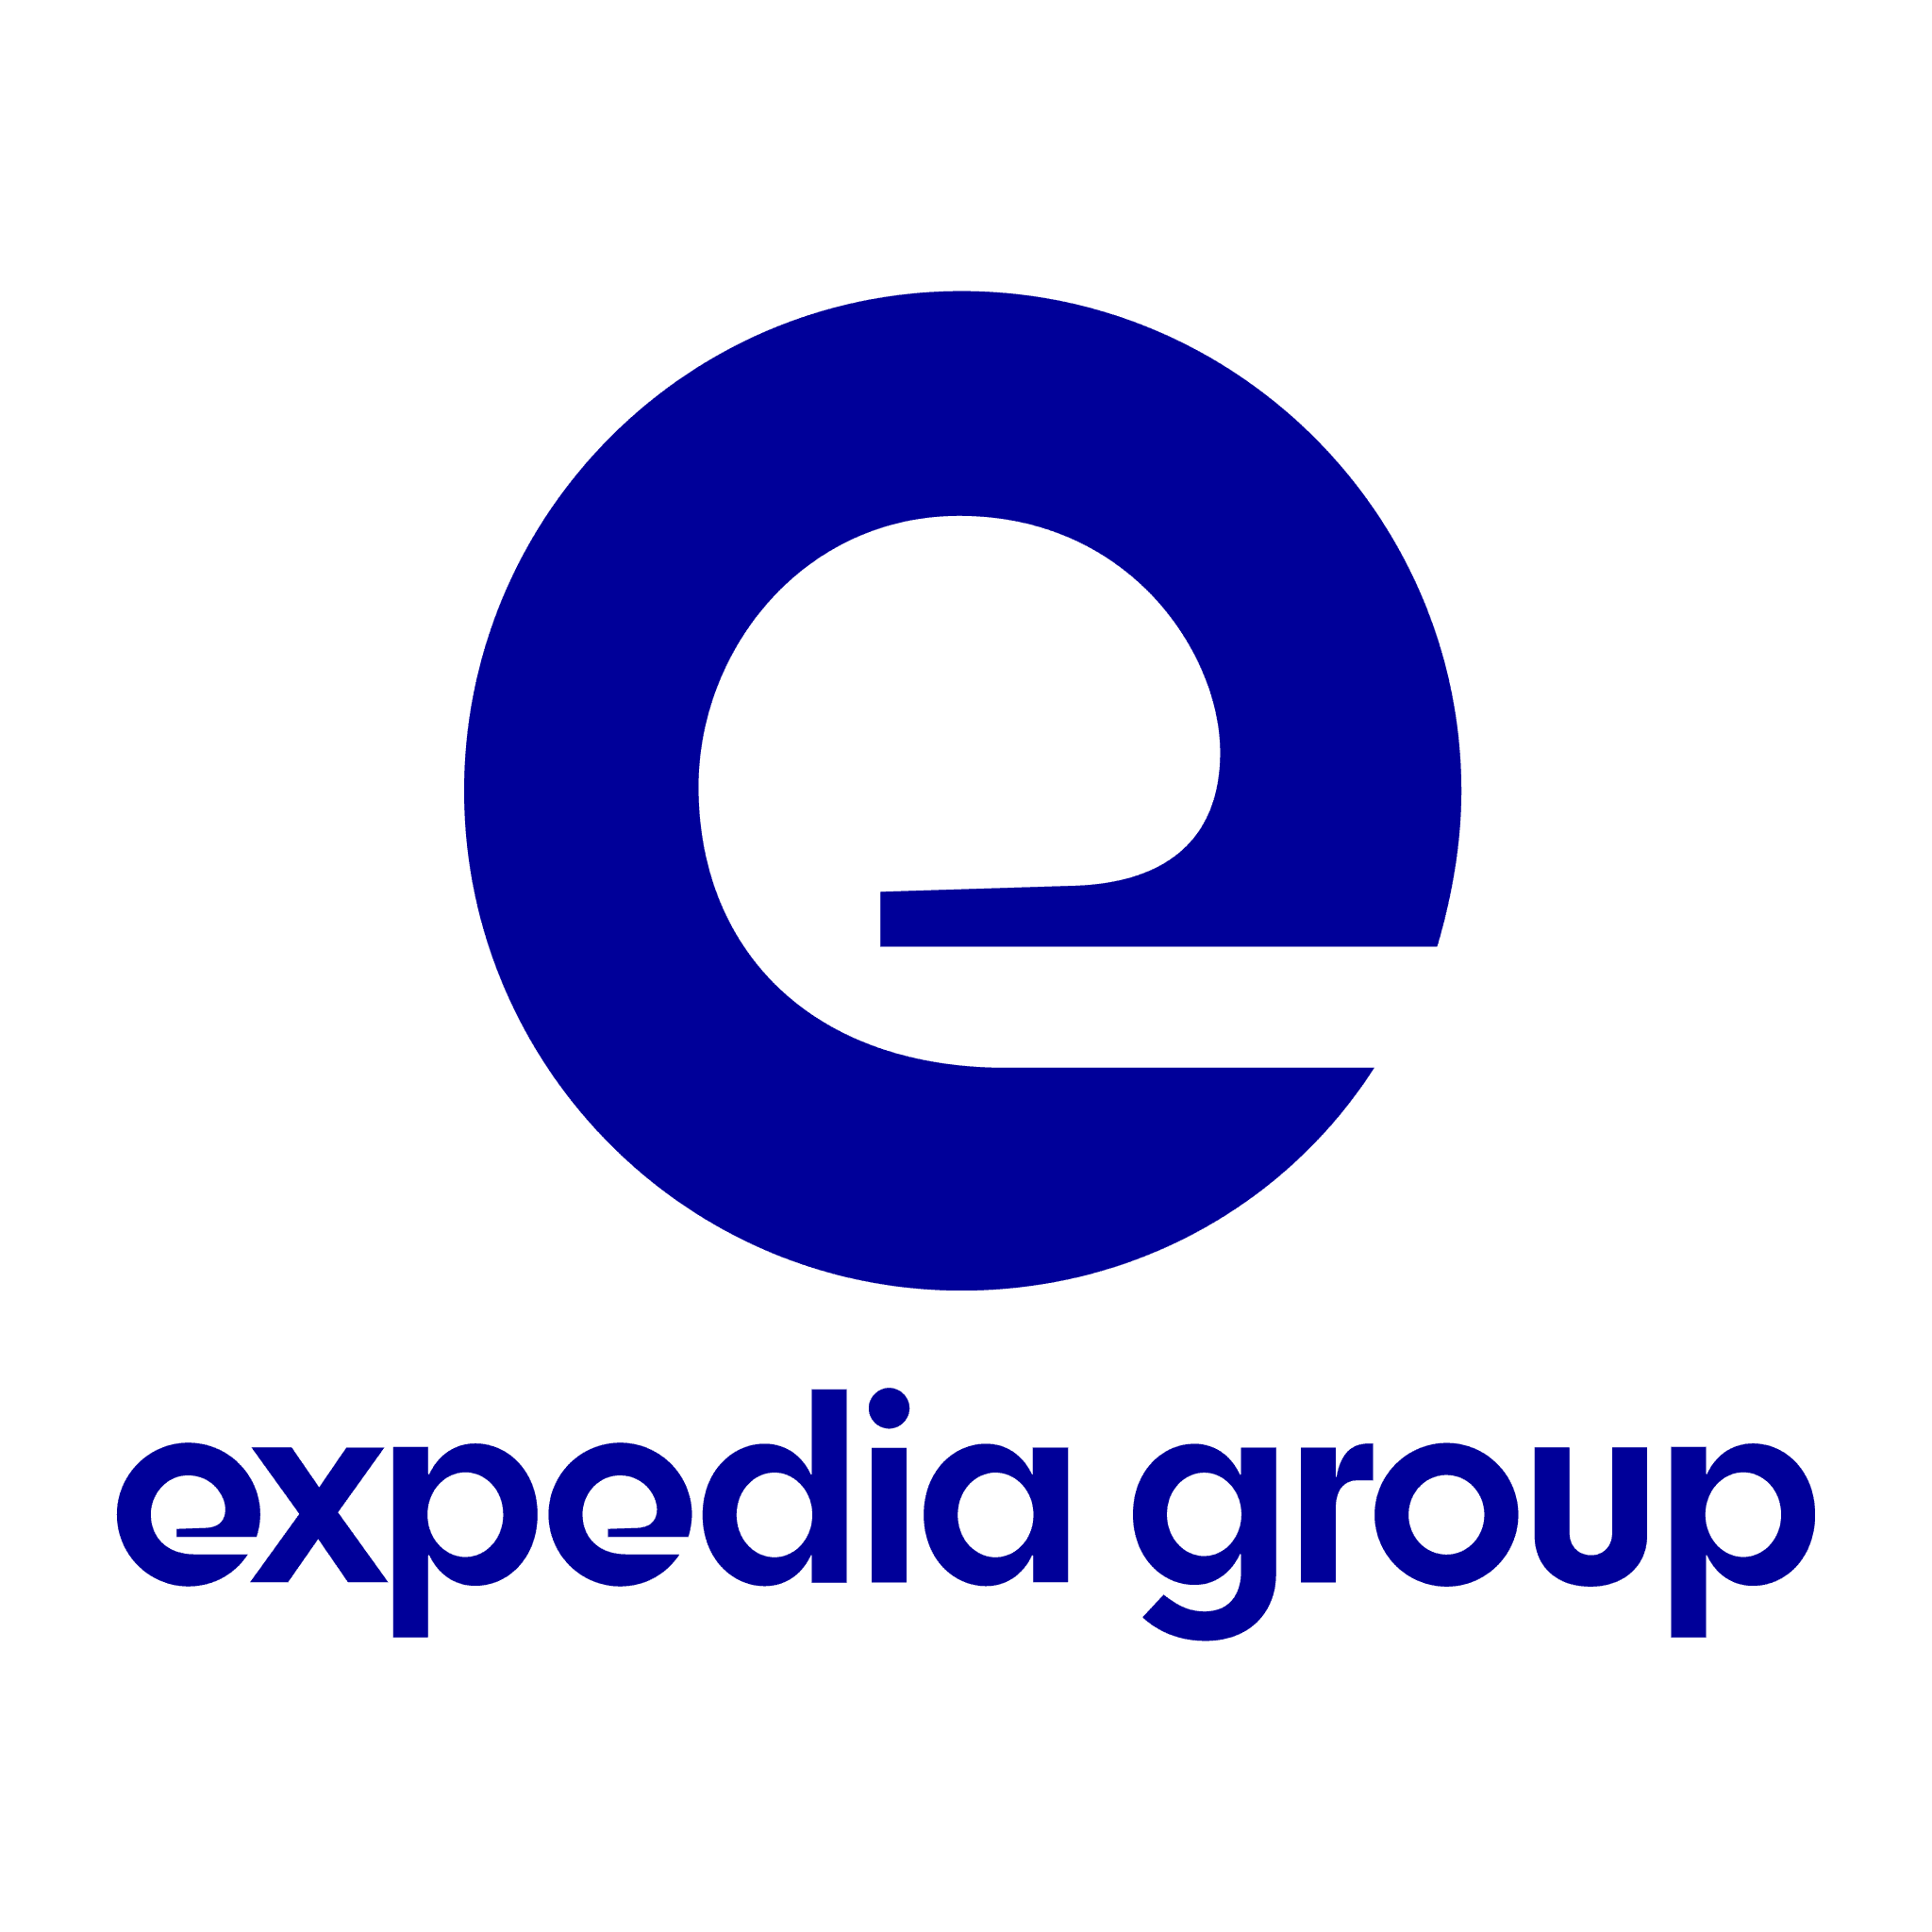 vetor expedia group